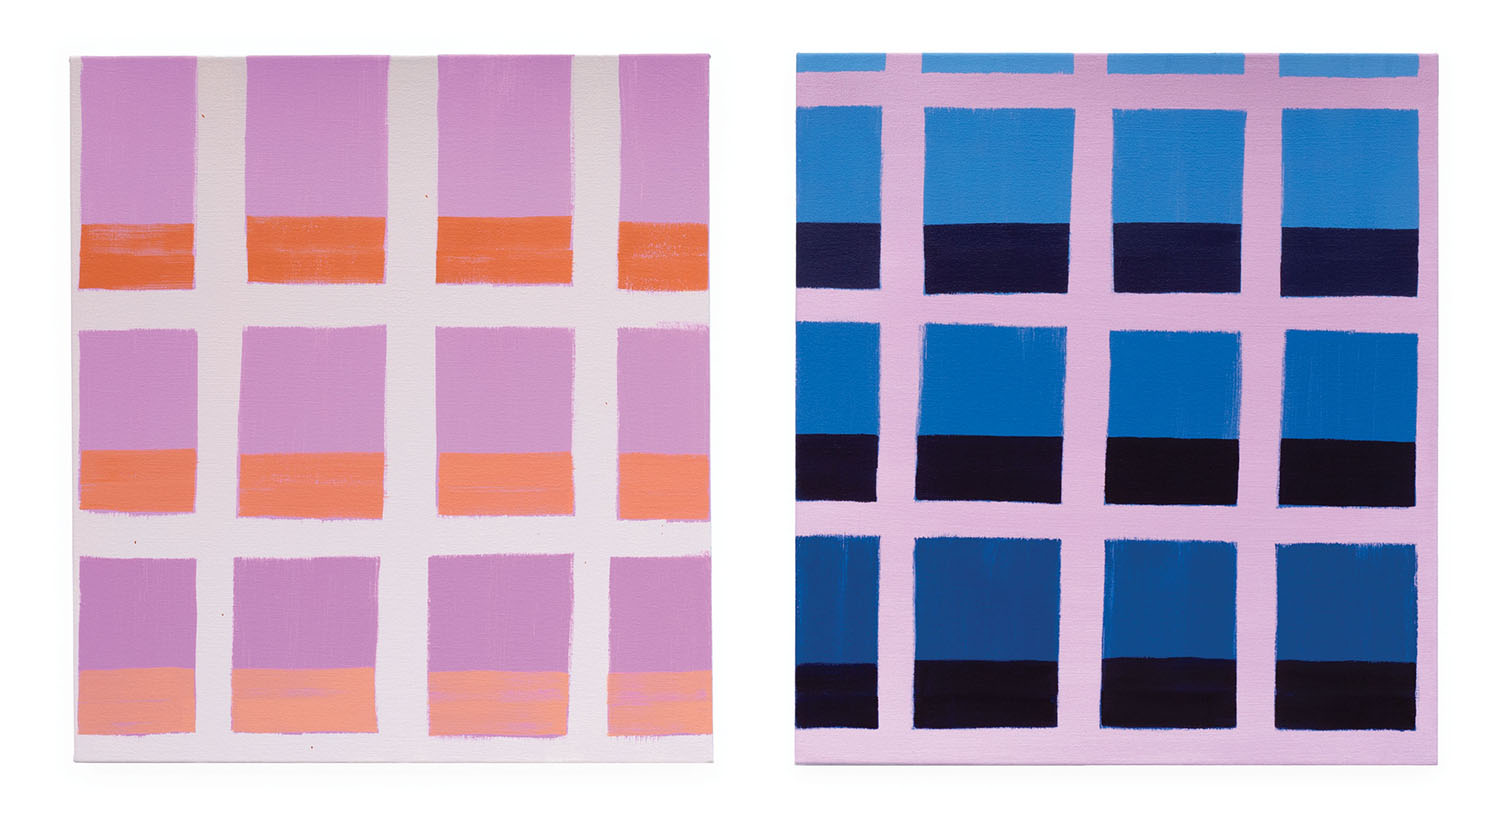 Left: mira, Anochecido Rosado, 2019. Oil on canvas, 22” x 20”. Right: mira, Noche Azul, 2019. Oil on canvas, 22” x 20”.